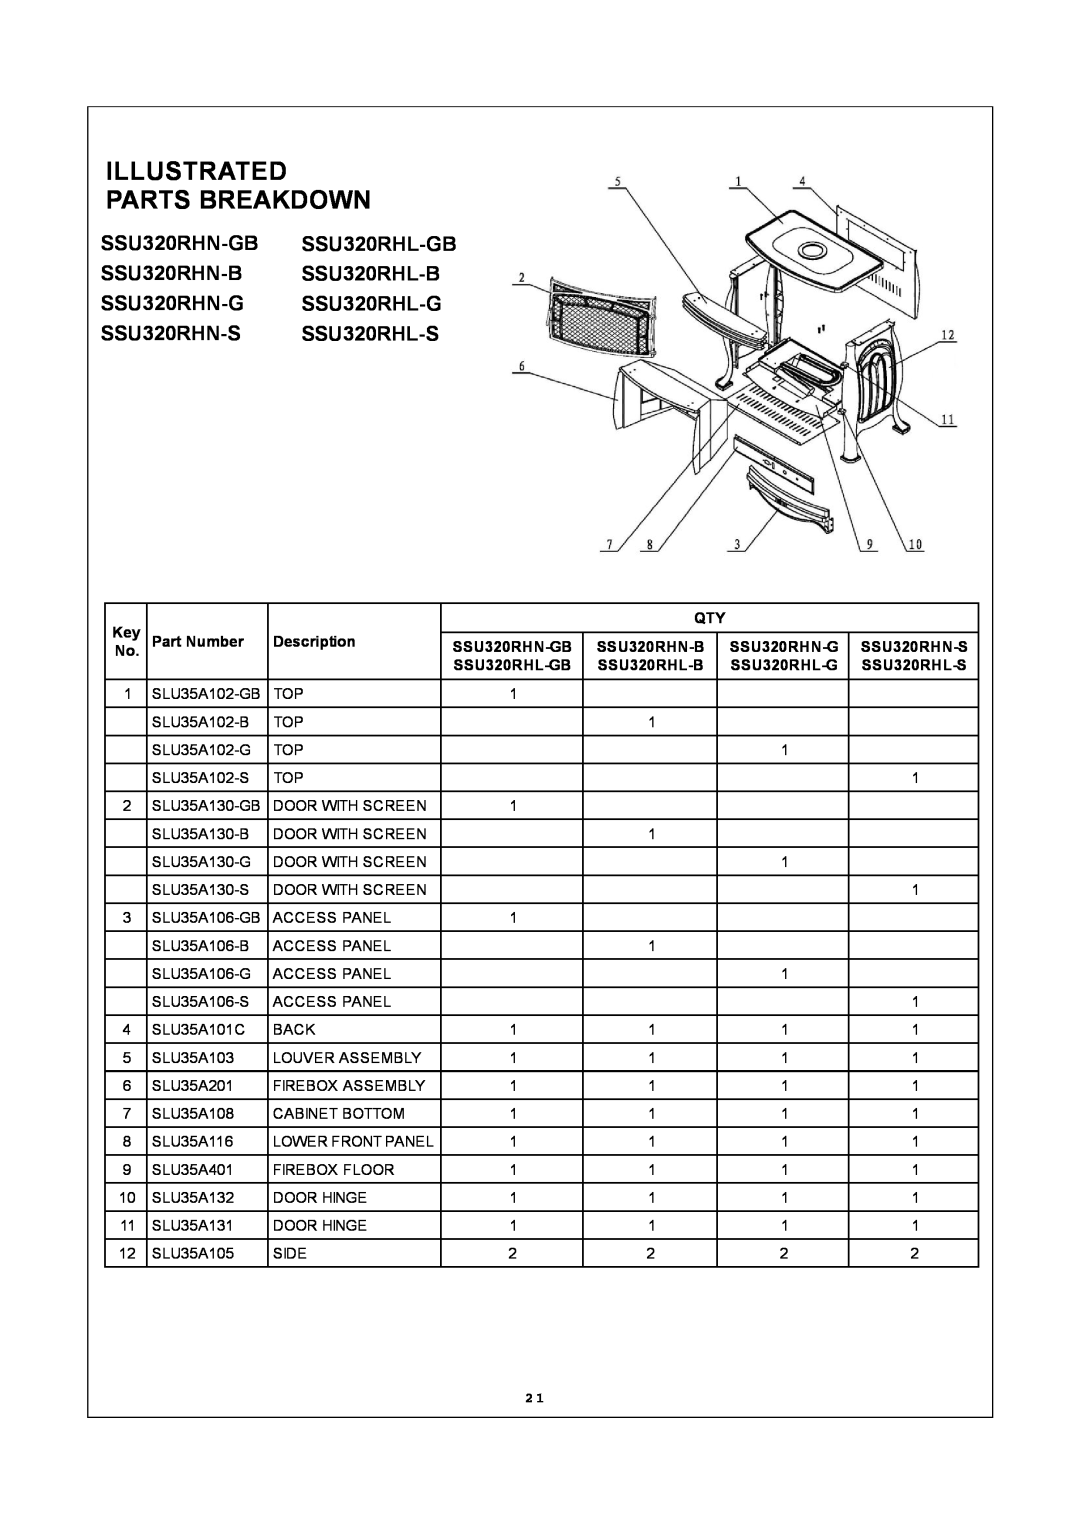 Procom Illustrated Parts Breakdown, SSU320RHN-GB SSU320RHL-GB SSU320RHN-B SSU320RHL-B, Part Number, Description 